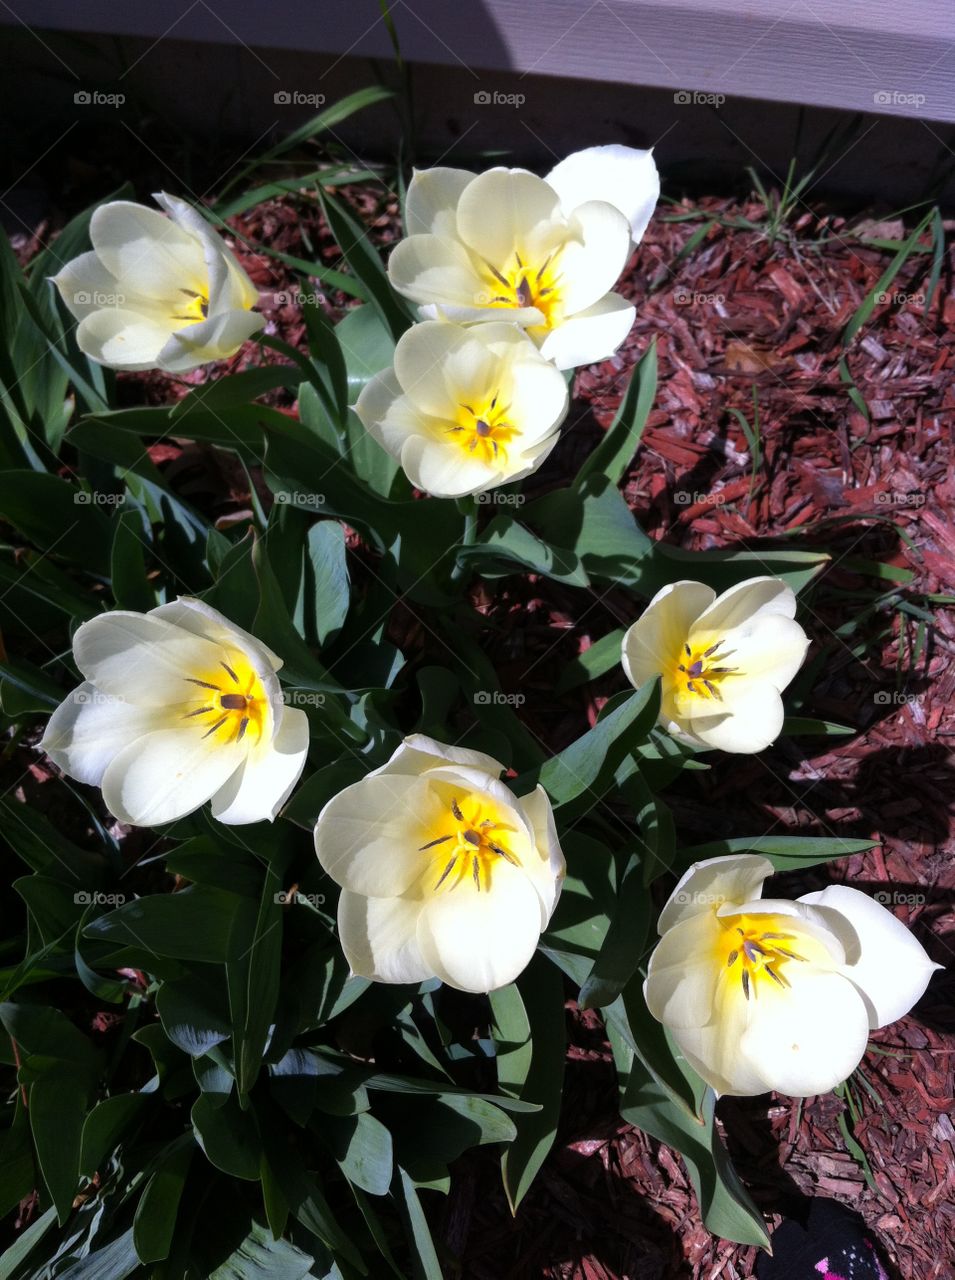 Spring has sprung. Spring tulips